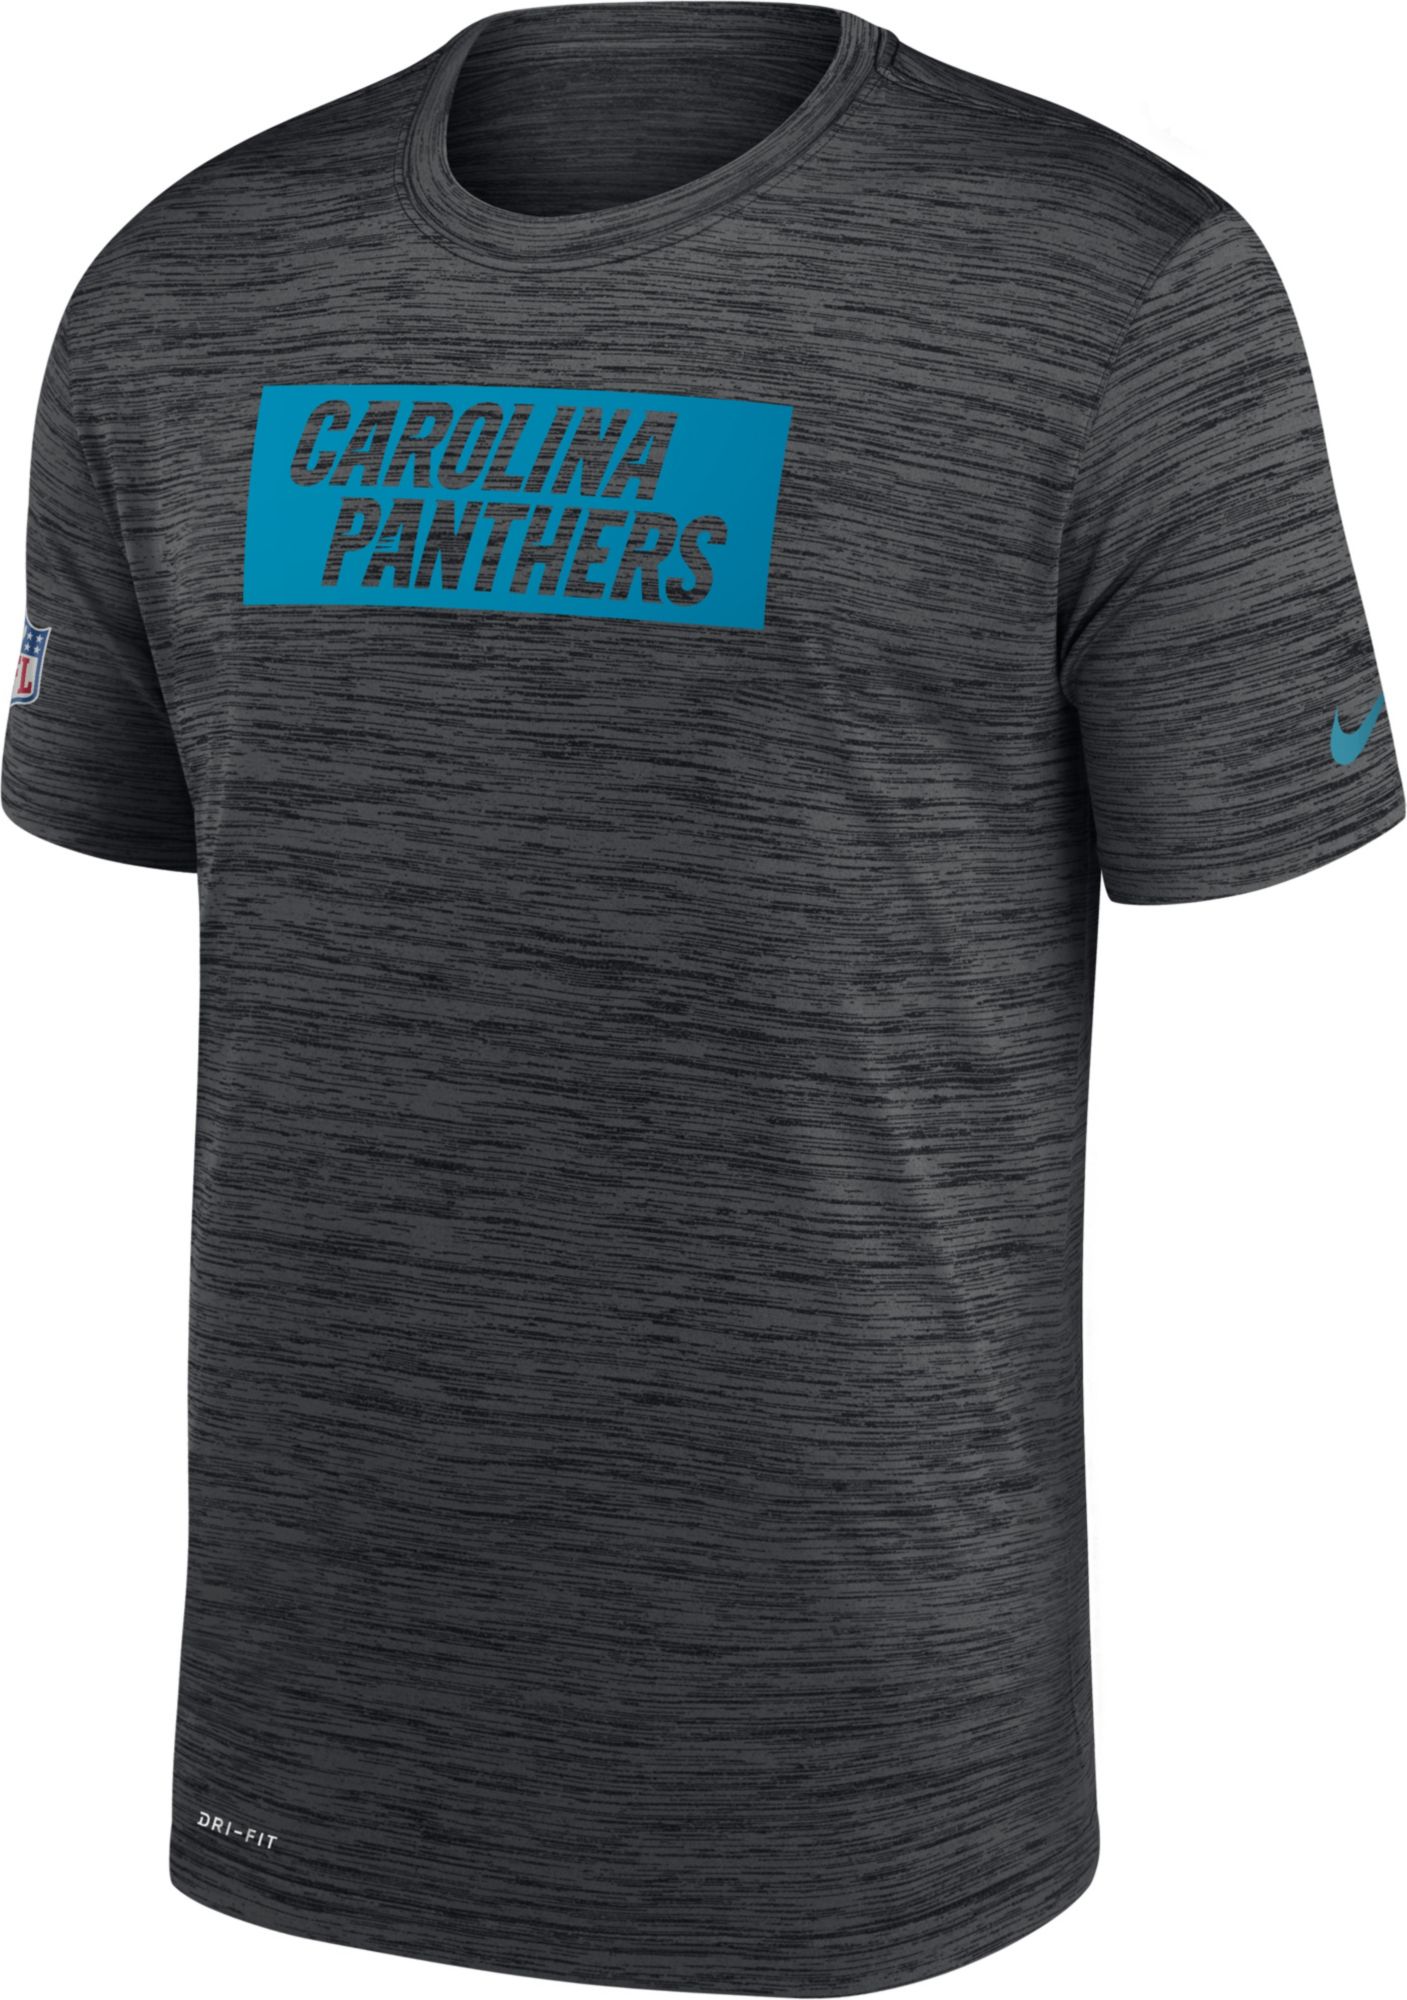 carolina panthers nike shirt